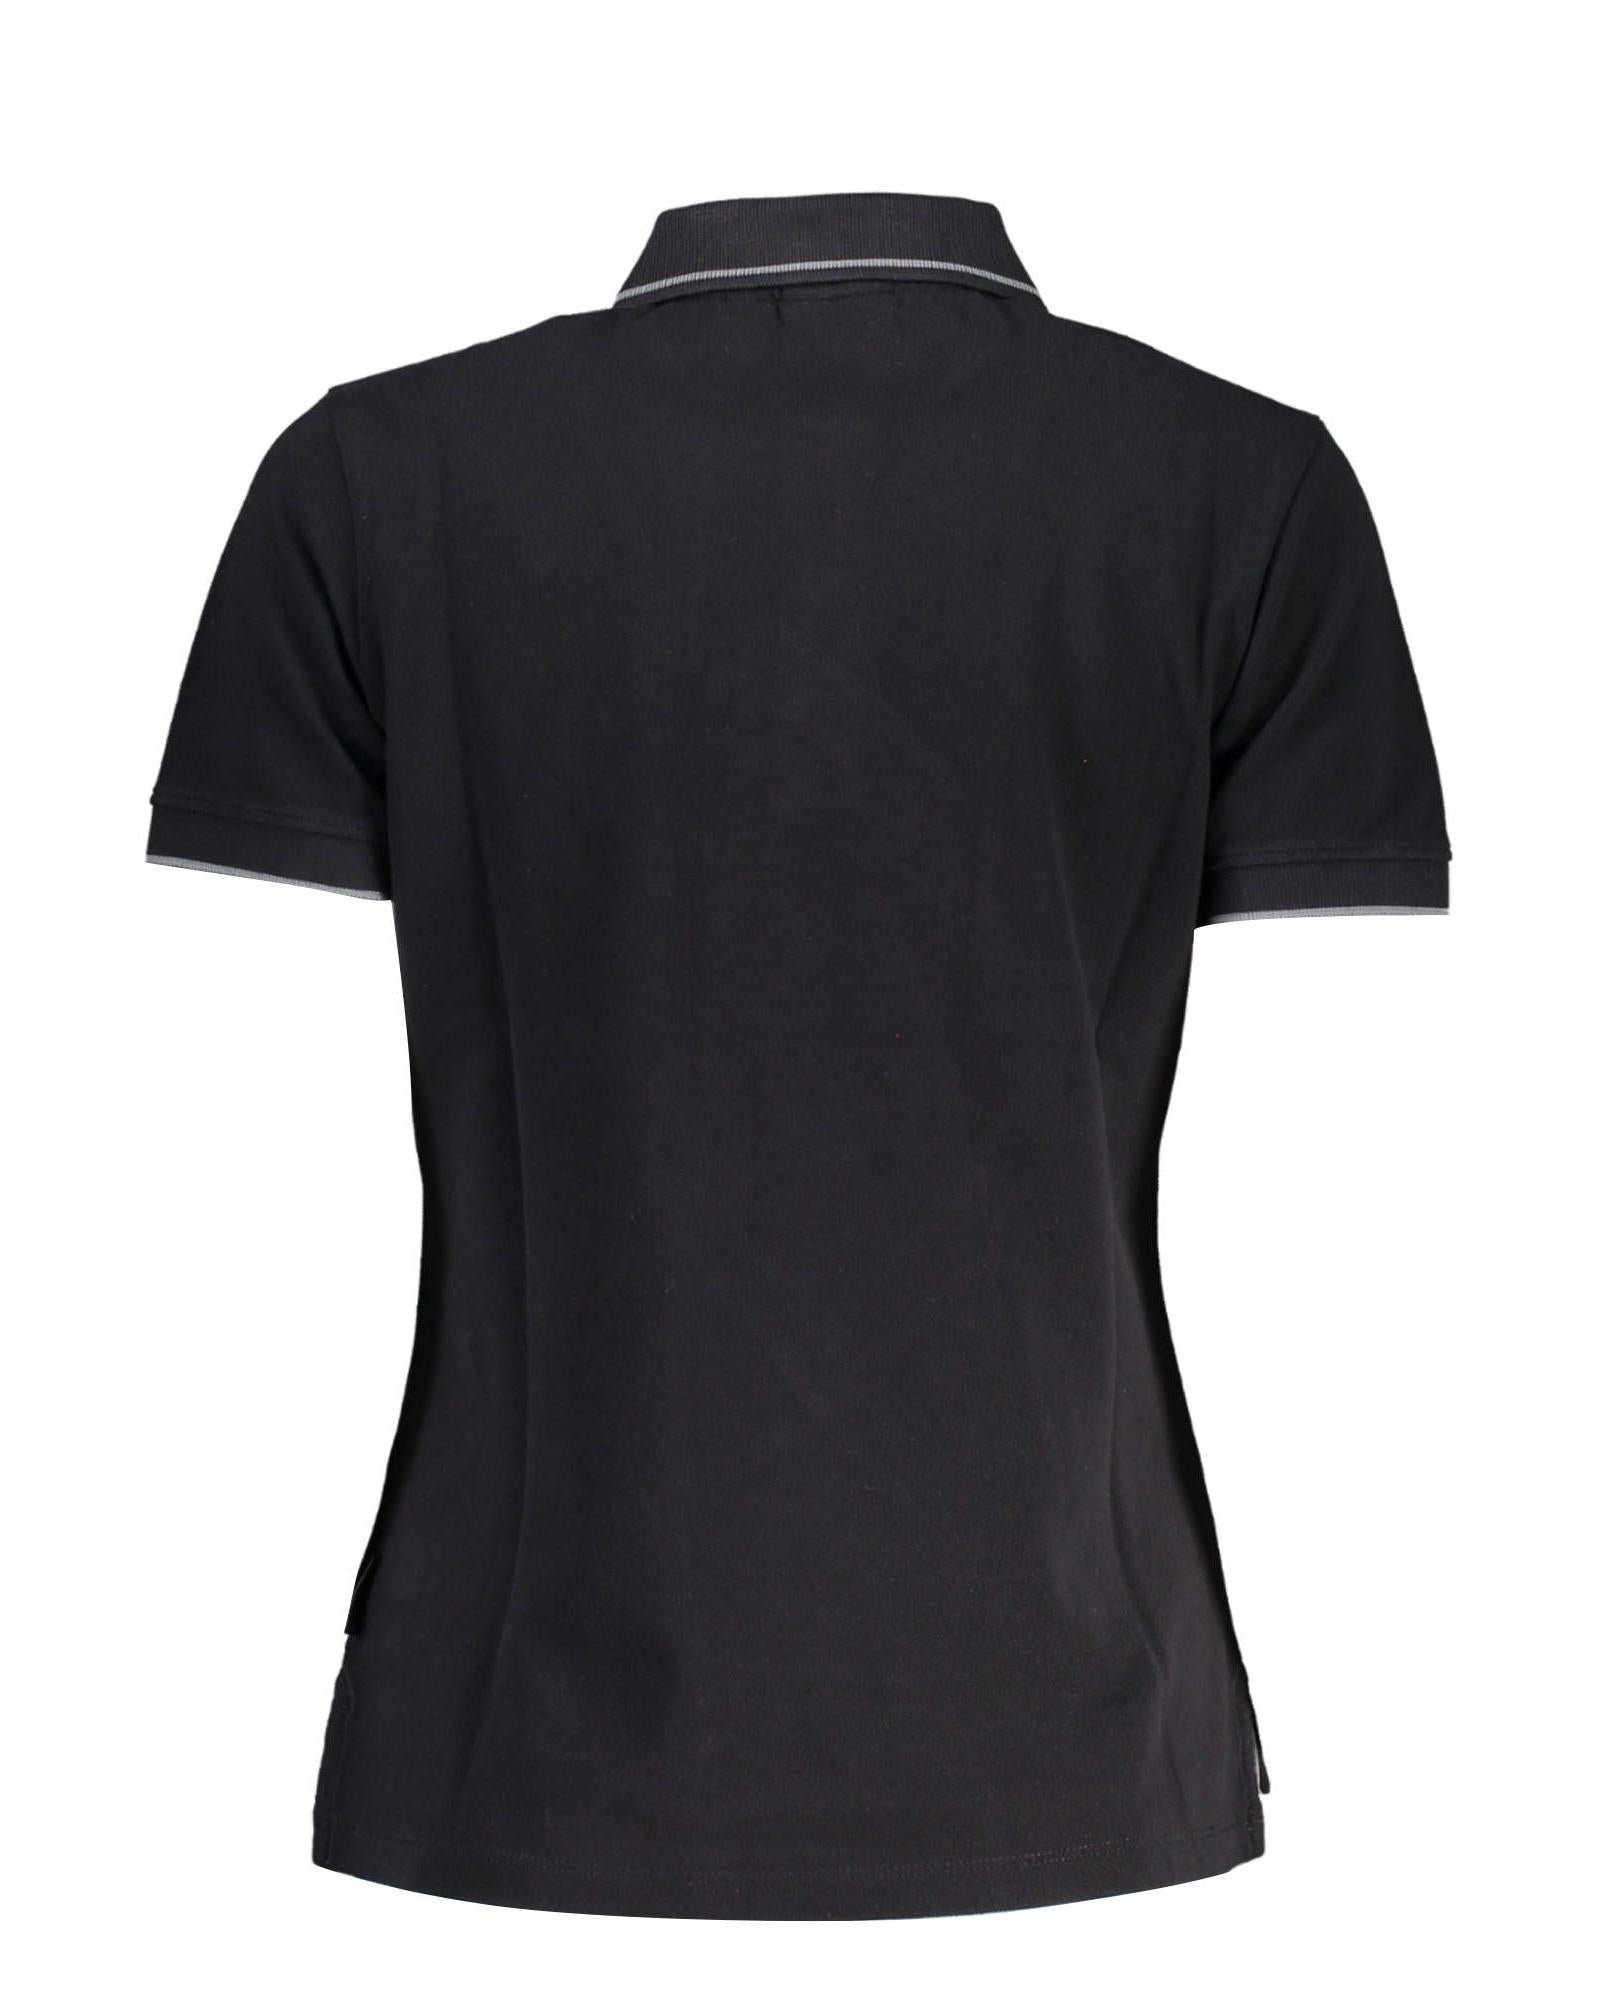 Men's Black Cotton Polo Shirt - S